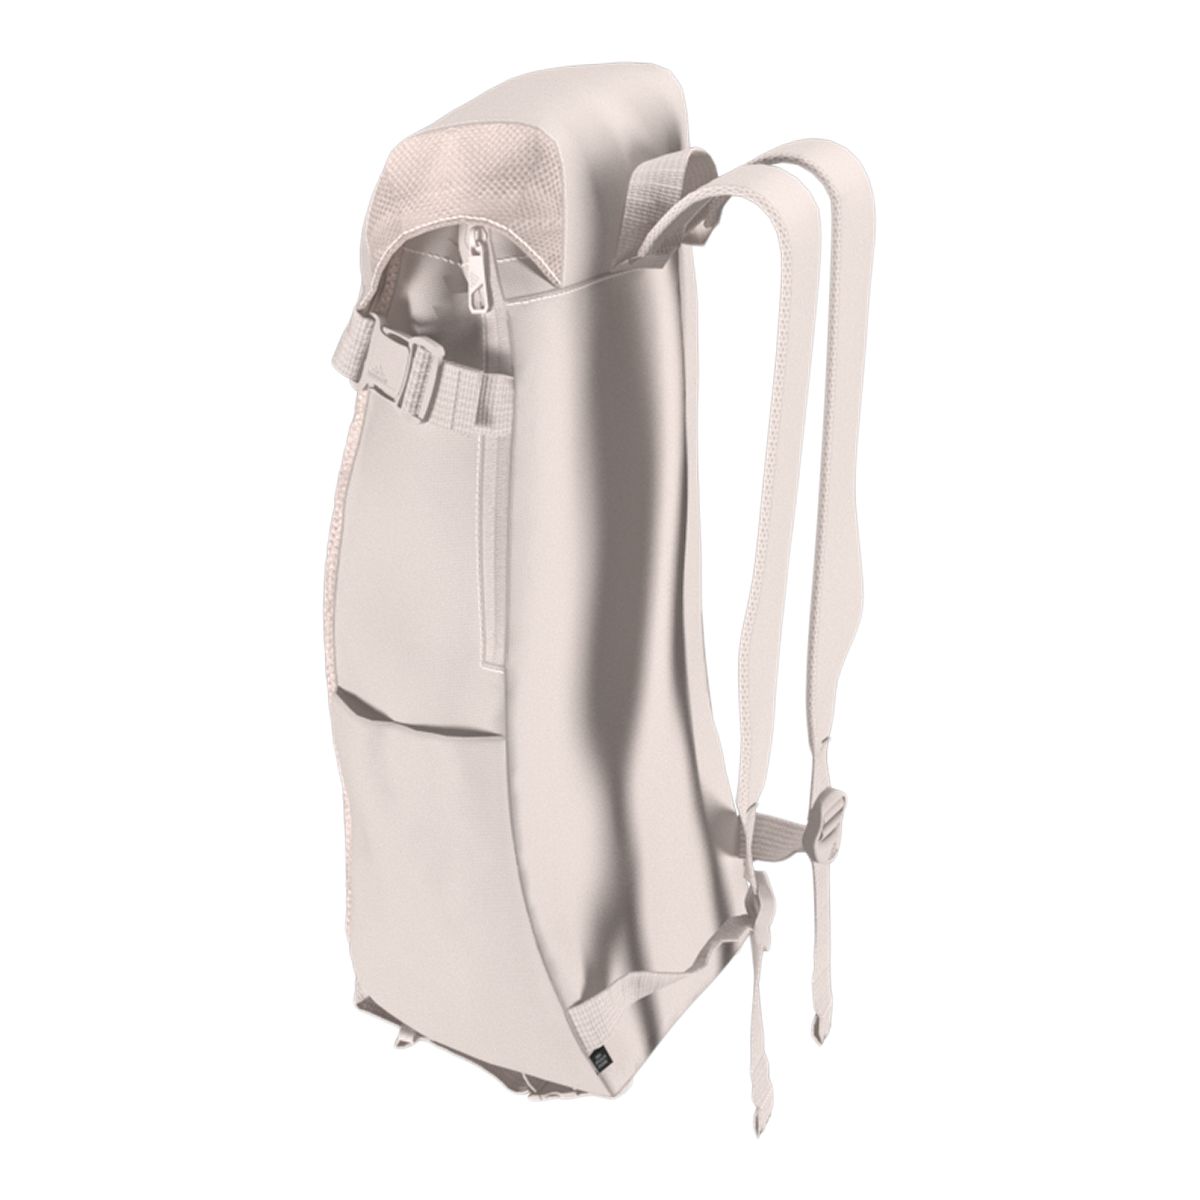 Adidas Yoga Mat Backpacks - Buy Adidas Yoga Mat Backpacks online